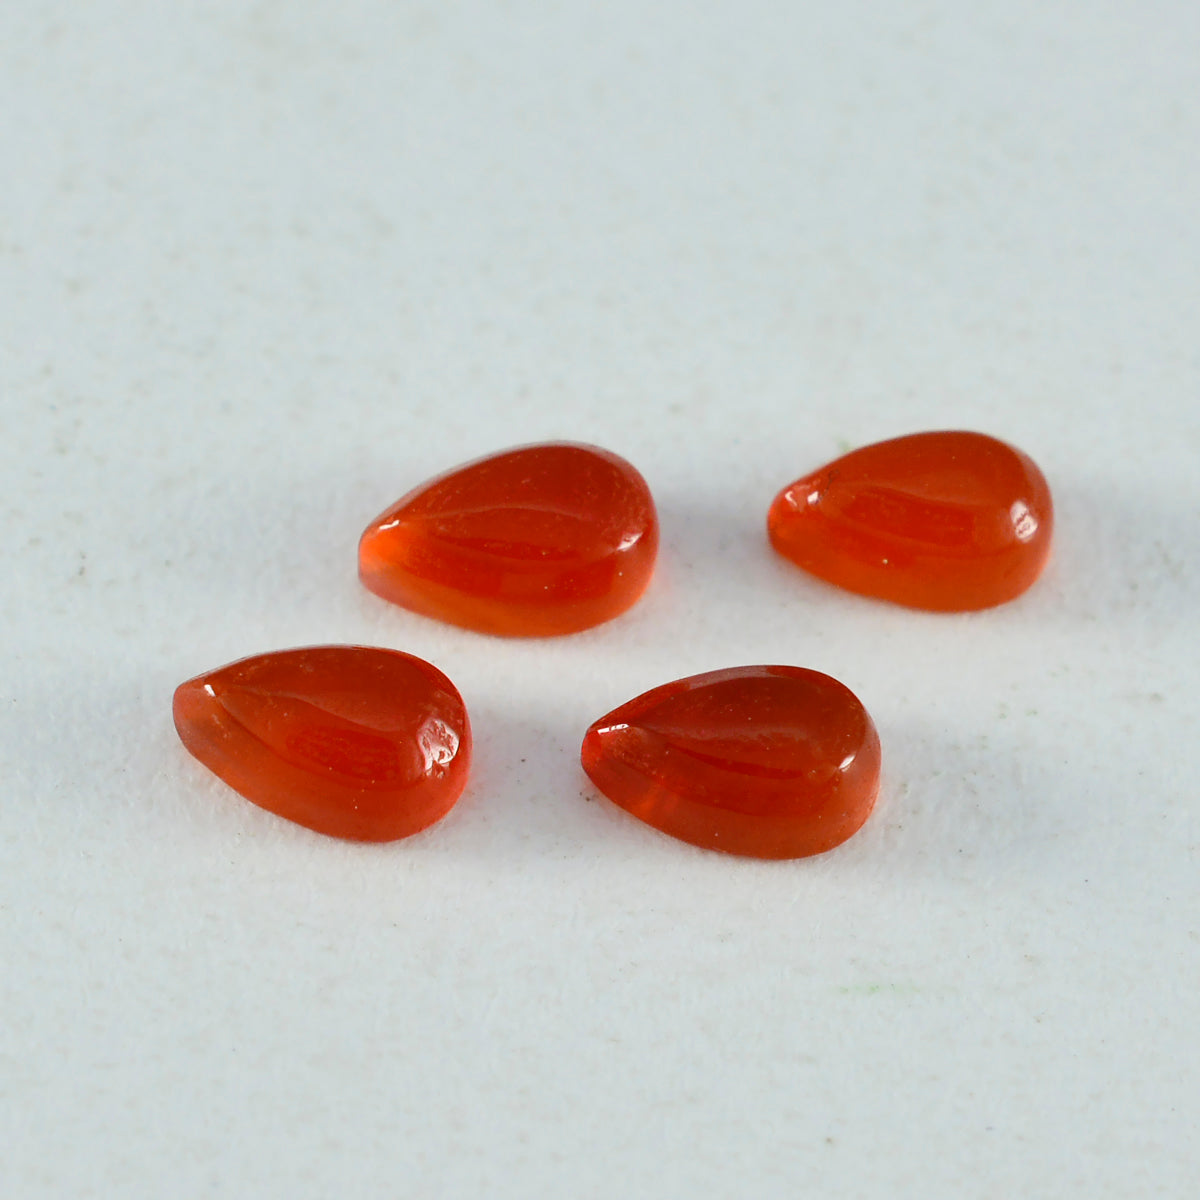 Riyogems 1PC Red Onyx Cabochon 7x10 mm Pear Shape nice-looking Quality Gems